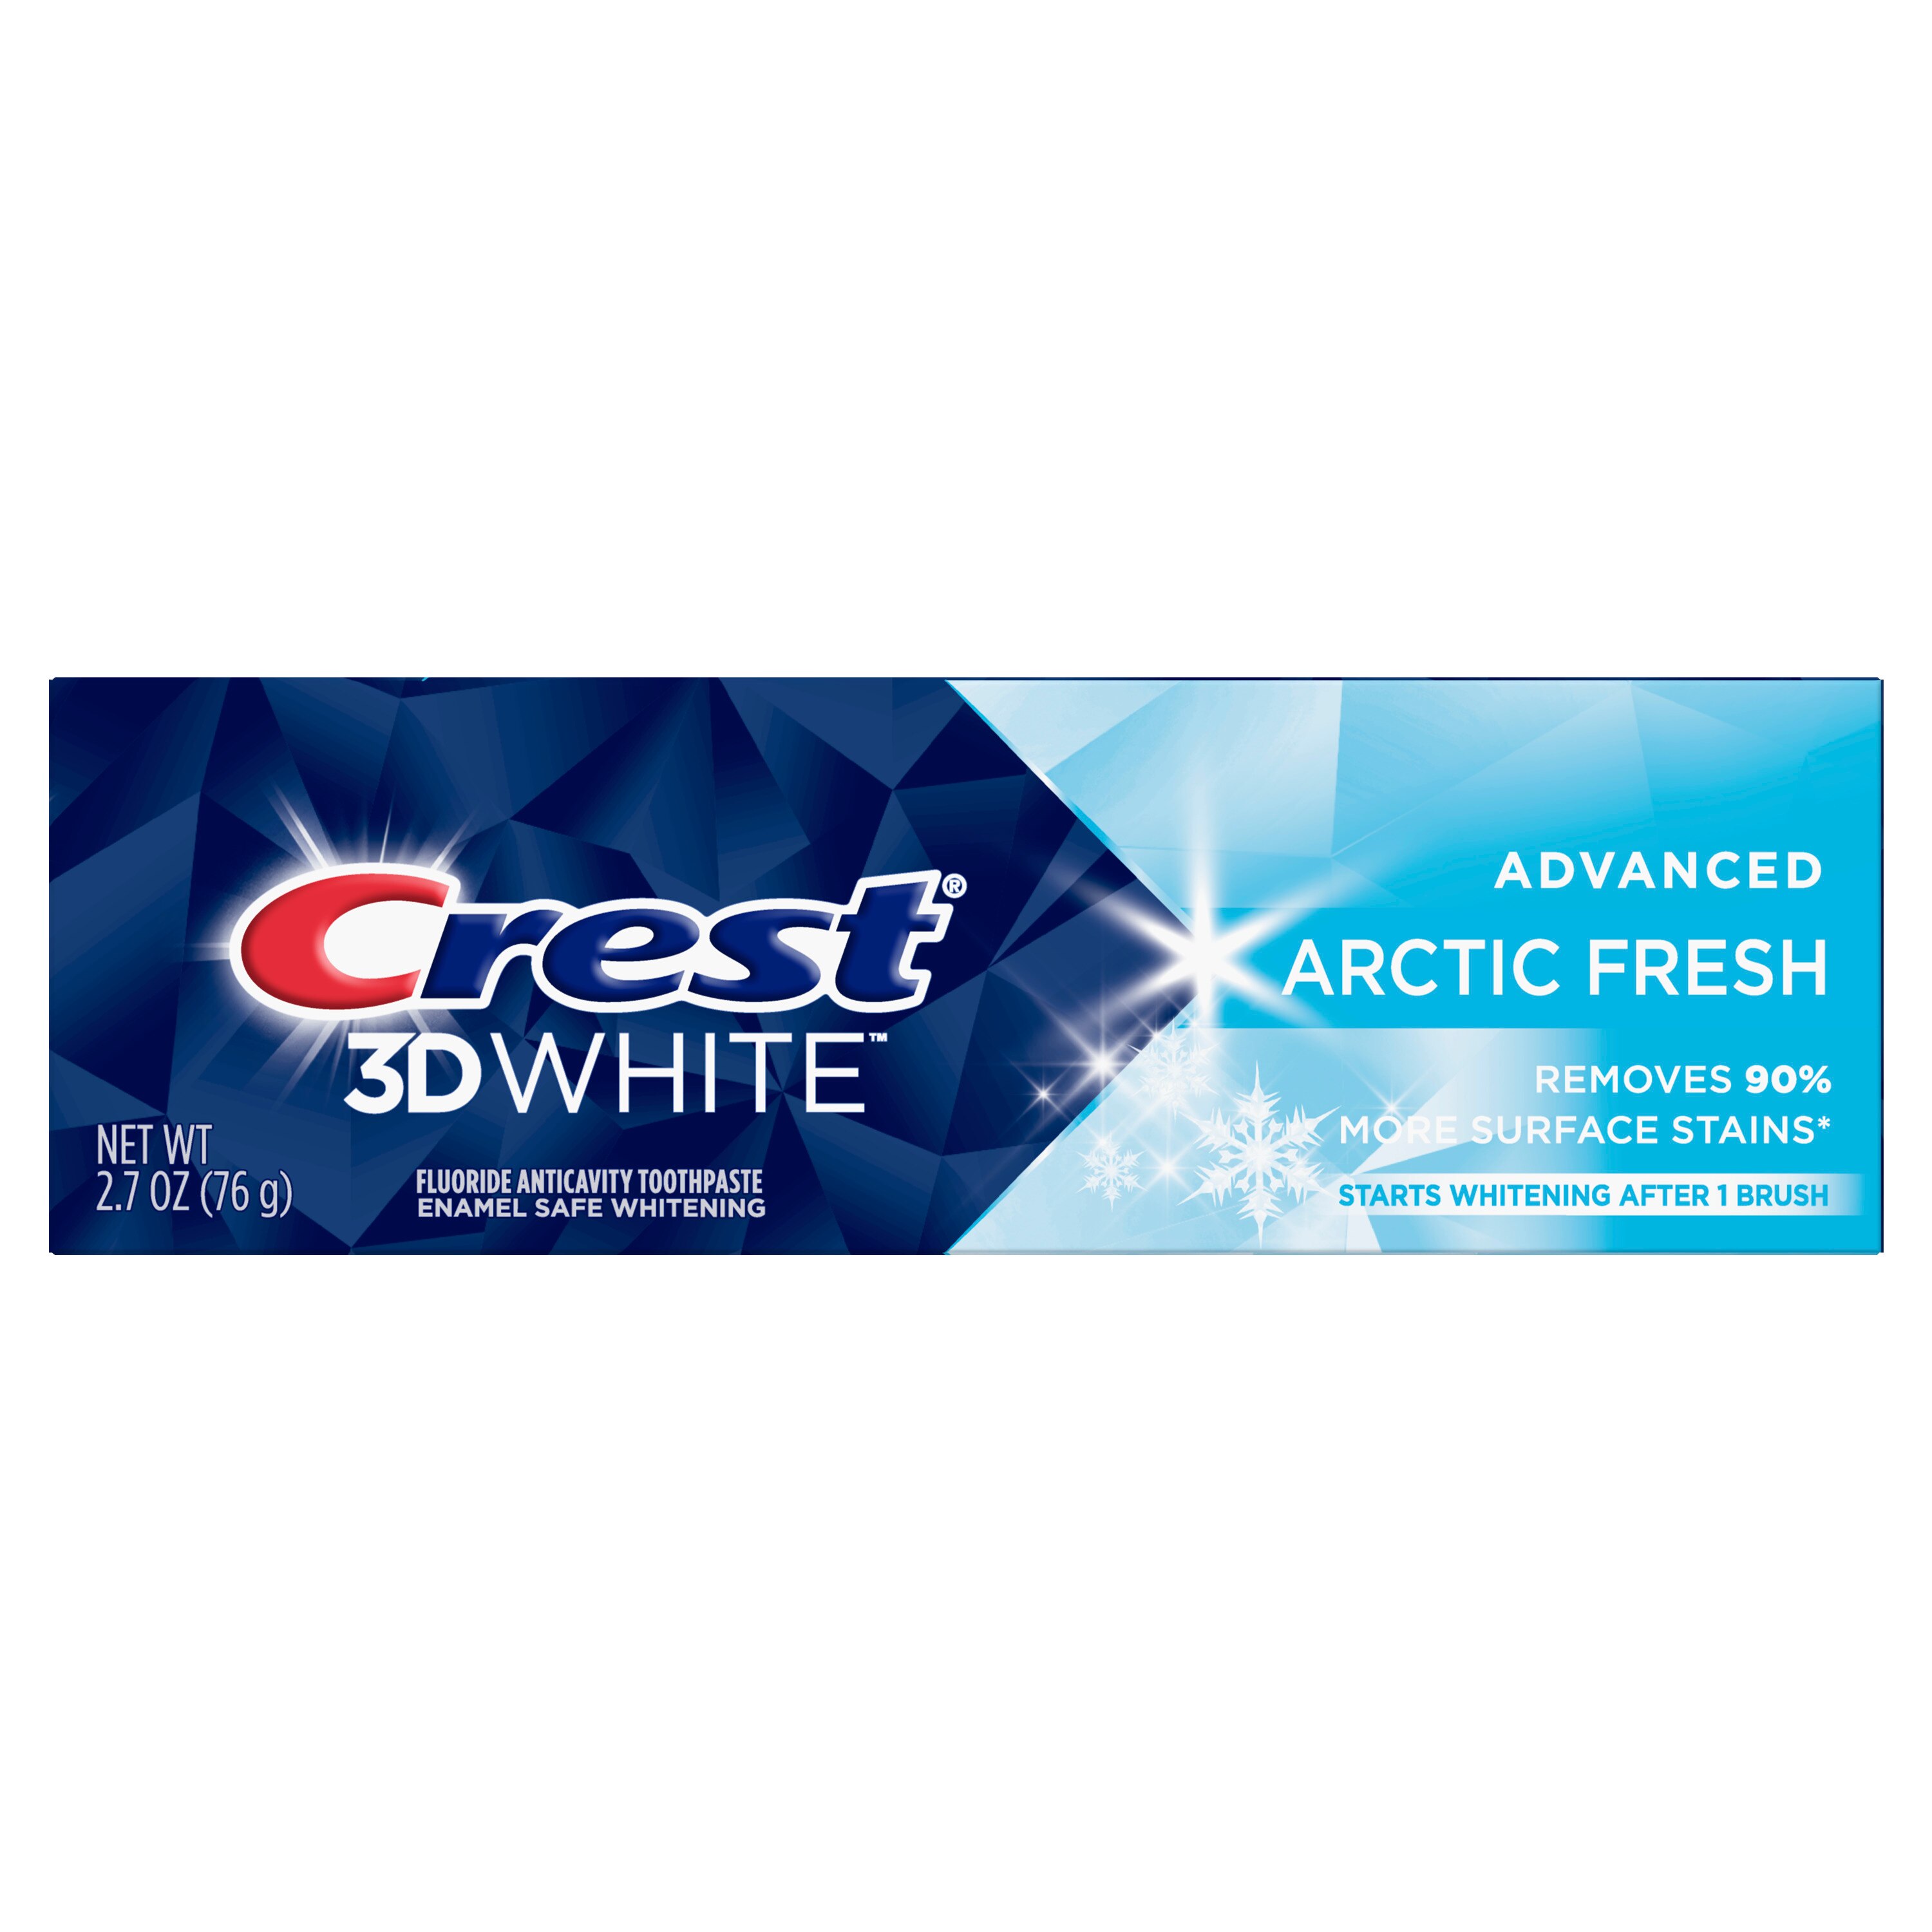 Crest 3D White Fluoride Anticavity Whitening Toothpaste, Advanced Artic Fresh, 2.7 Oz , CVS